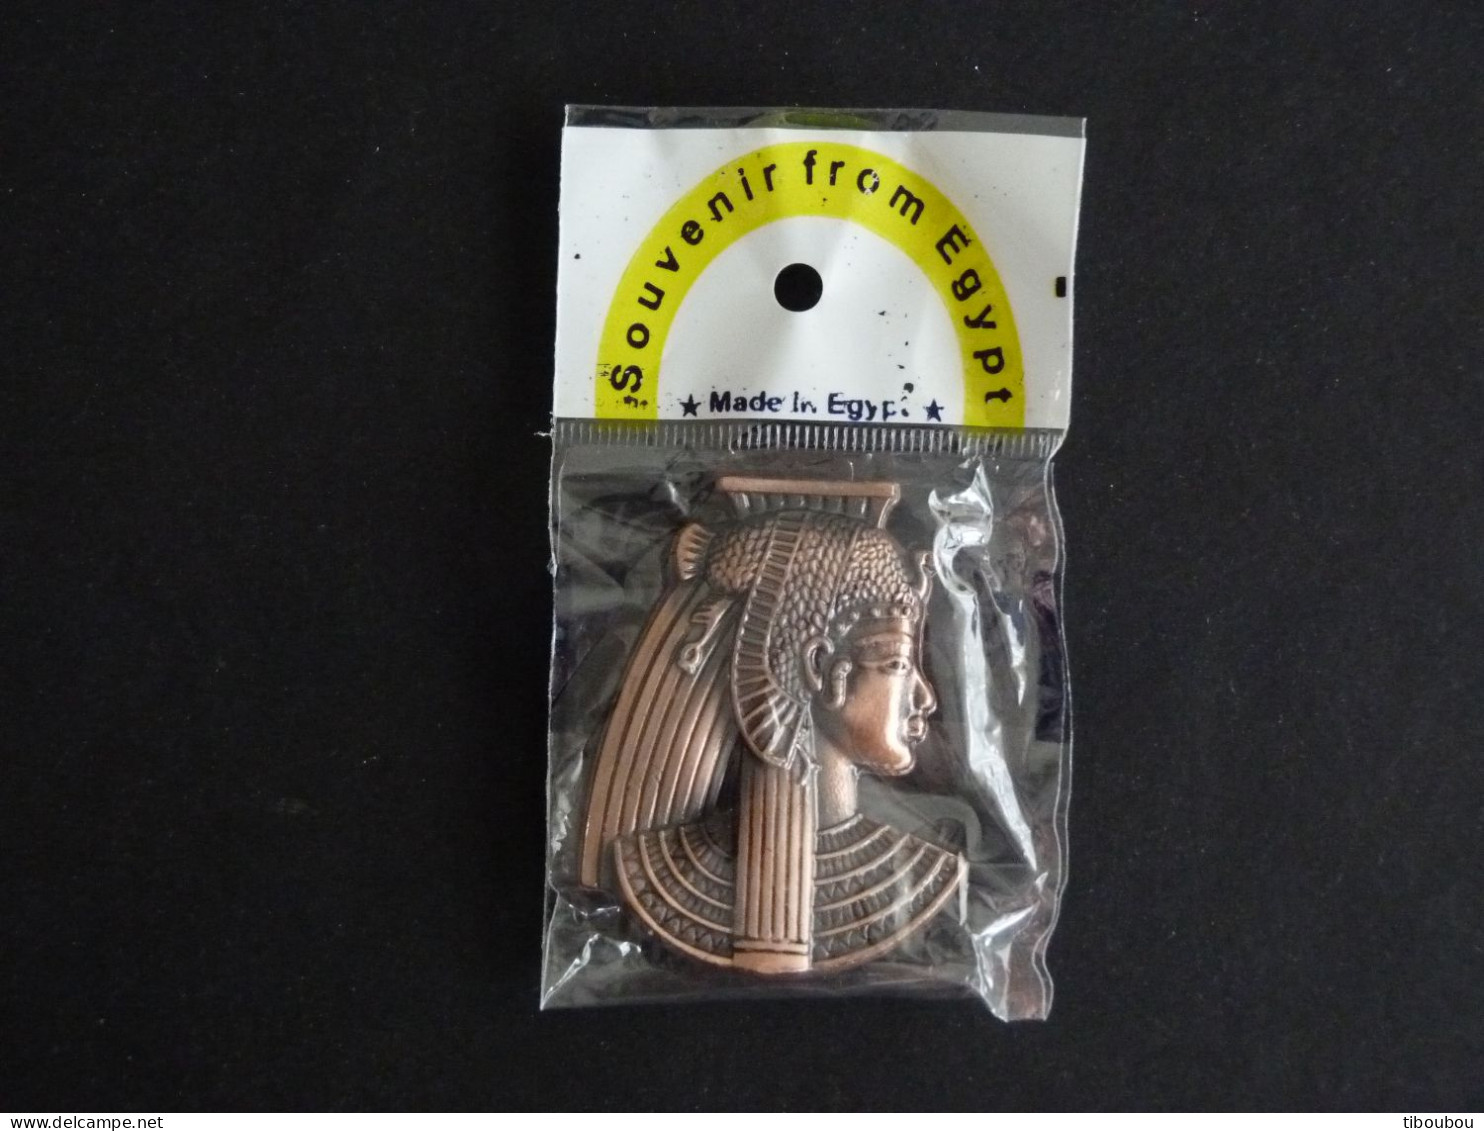 MAGNET EN METAL SOUVENIR FROM EGYPT EGYPTE SOUS BLISTER - CLEOPATRE NEFERTITI - Tourismus